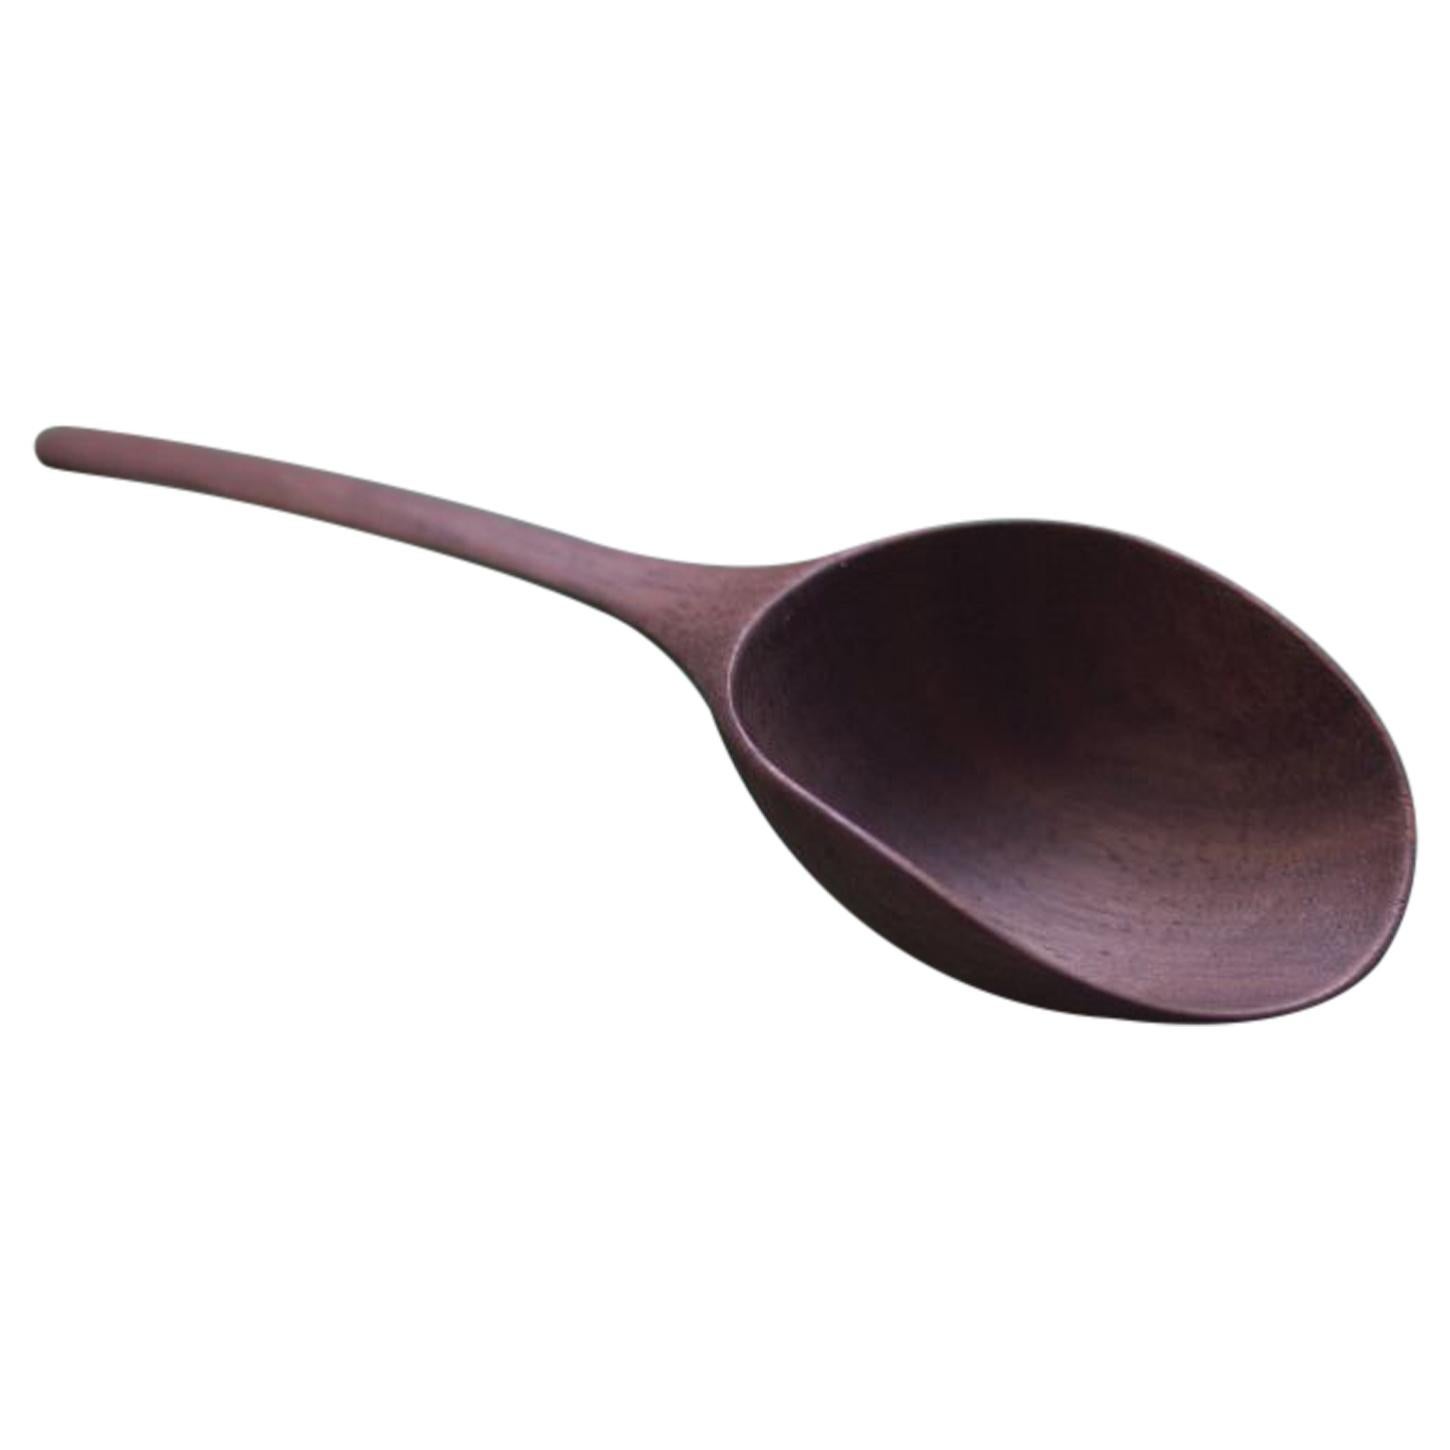 Kupu Spoon by Antrei Hartikainen For Sale